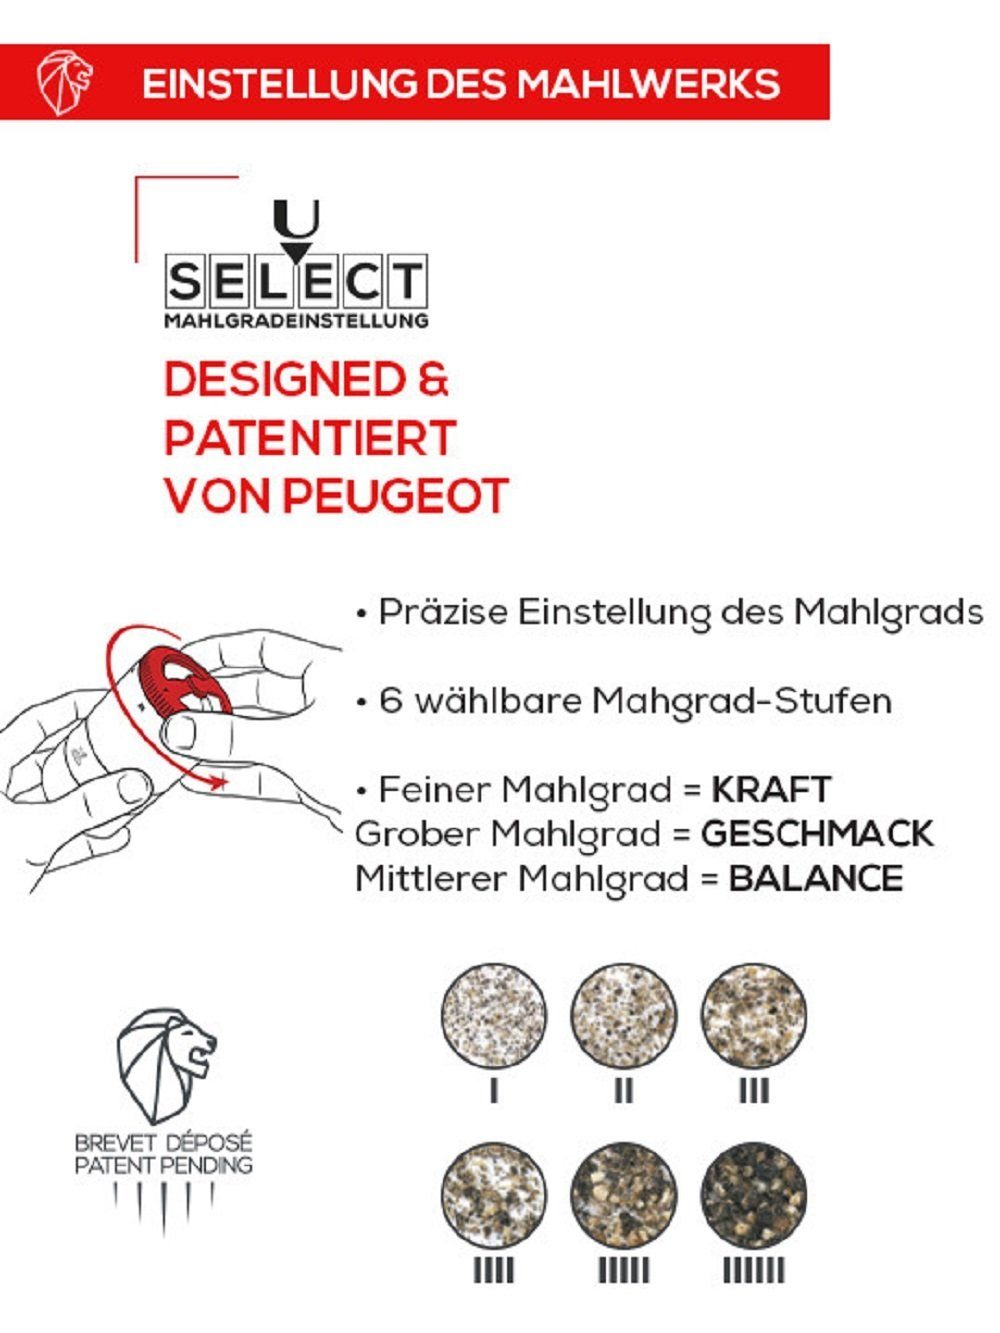 PEUGEOT Peugeot, Geschenkbox, MAESTRO u' (1 select, Pfefferbar graphit Stück) Kräutermühle